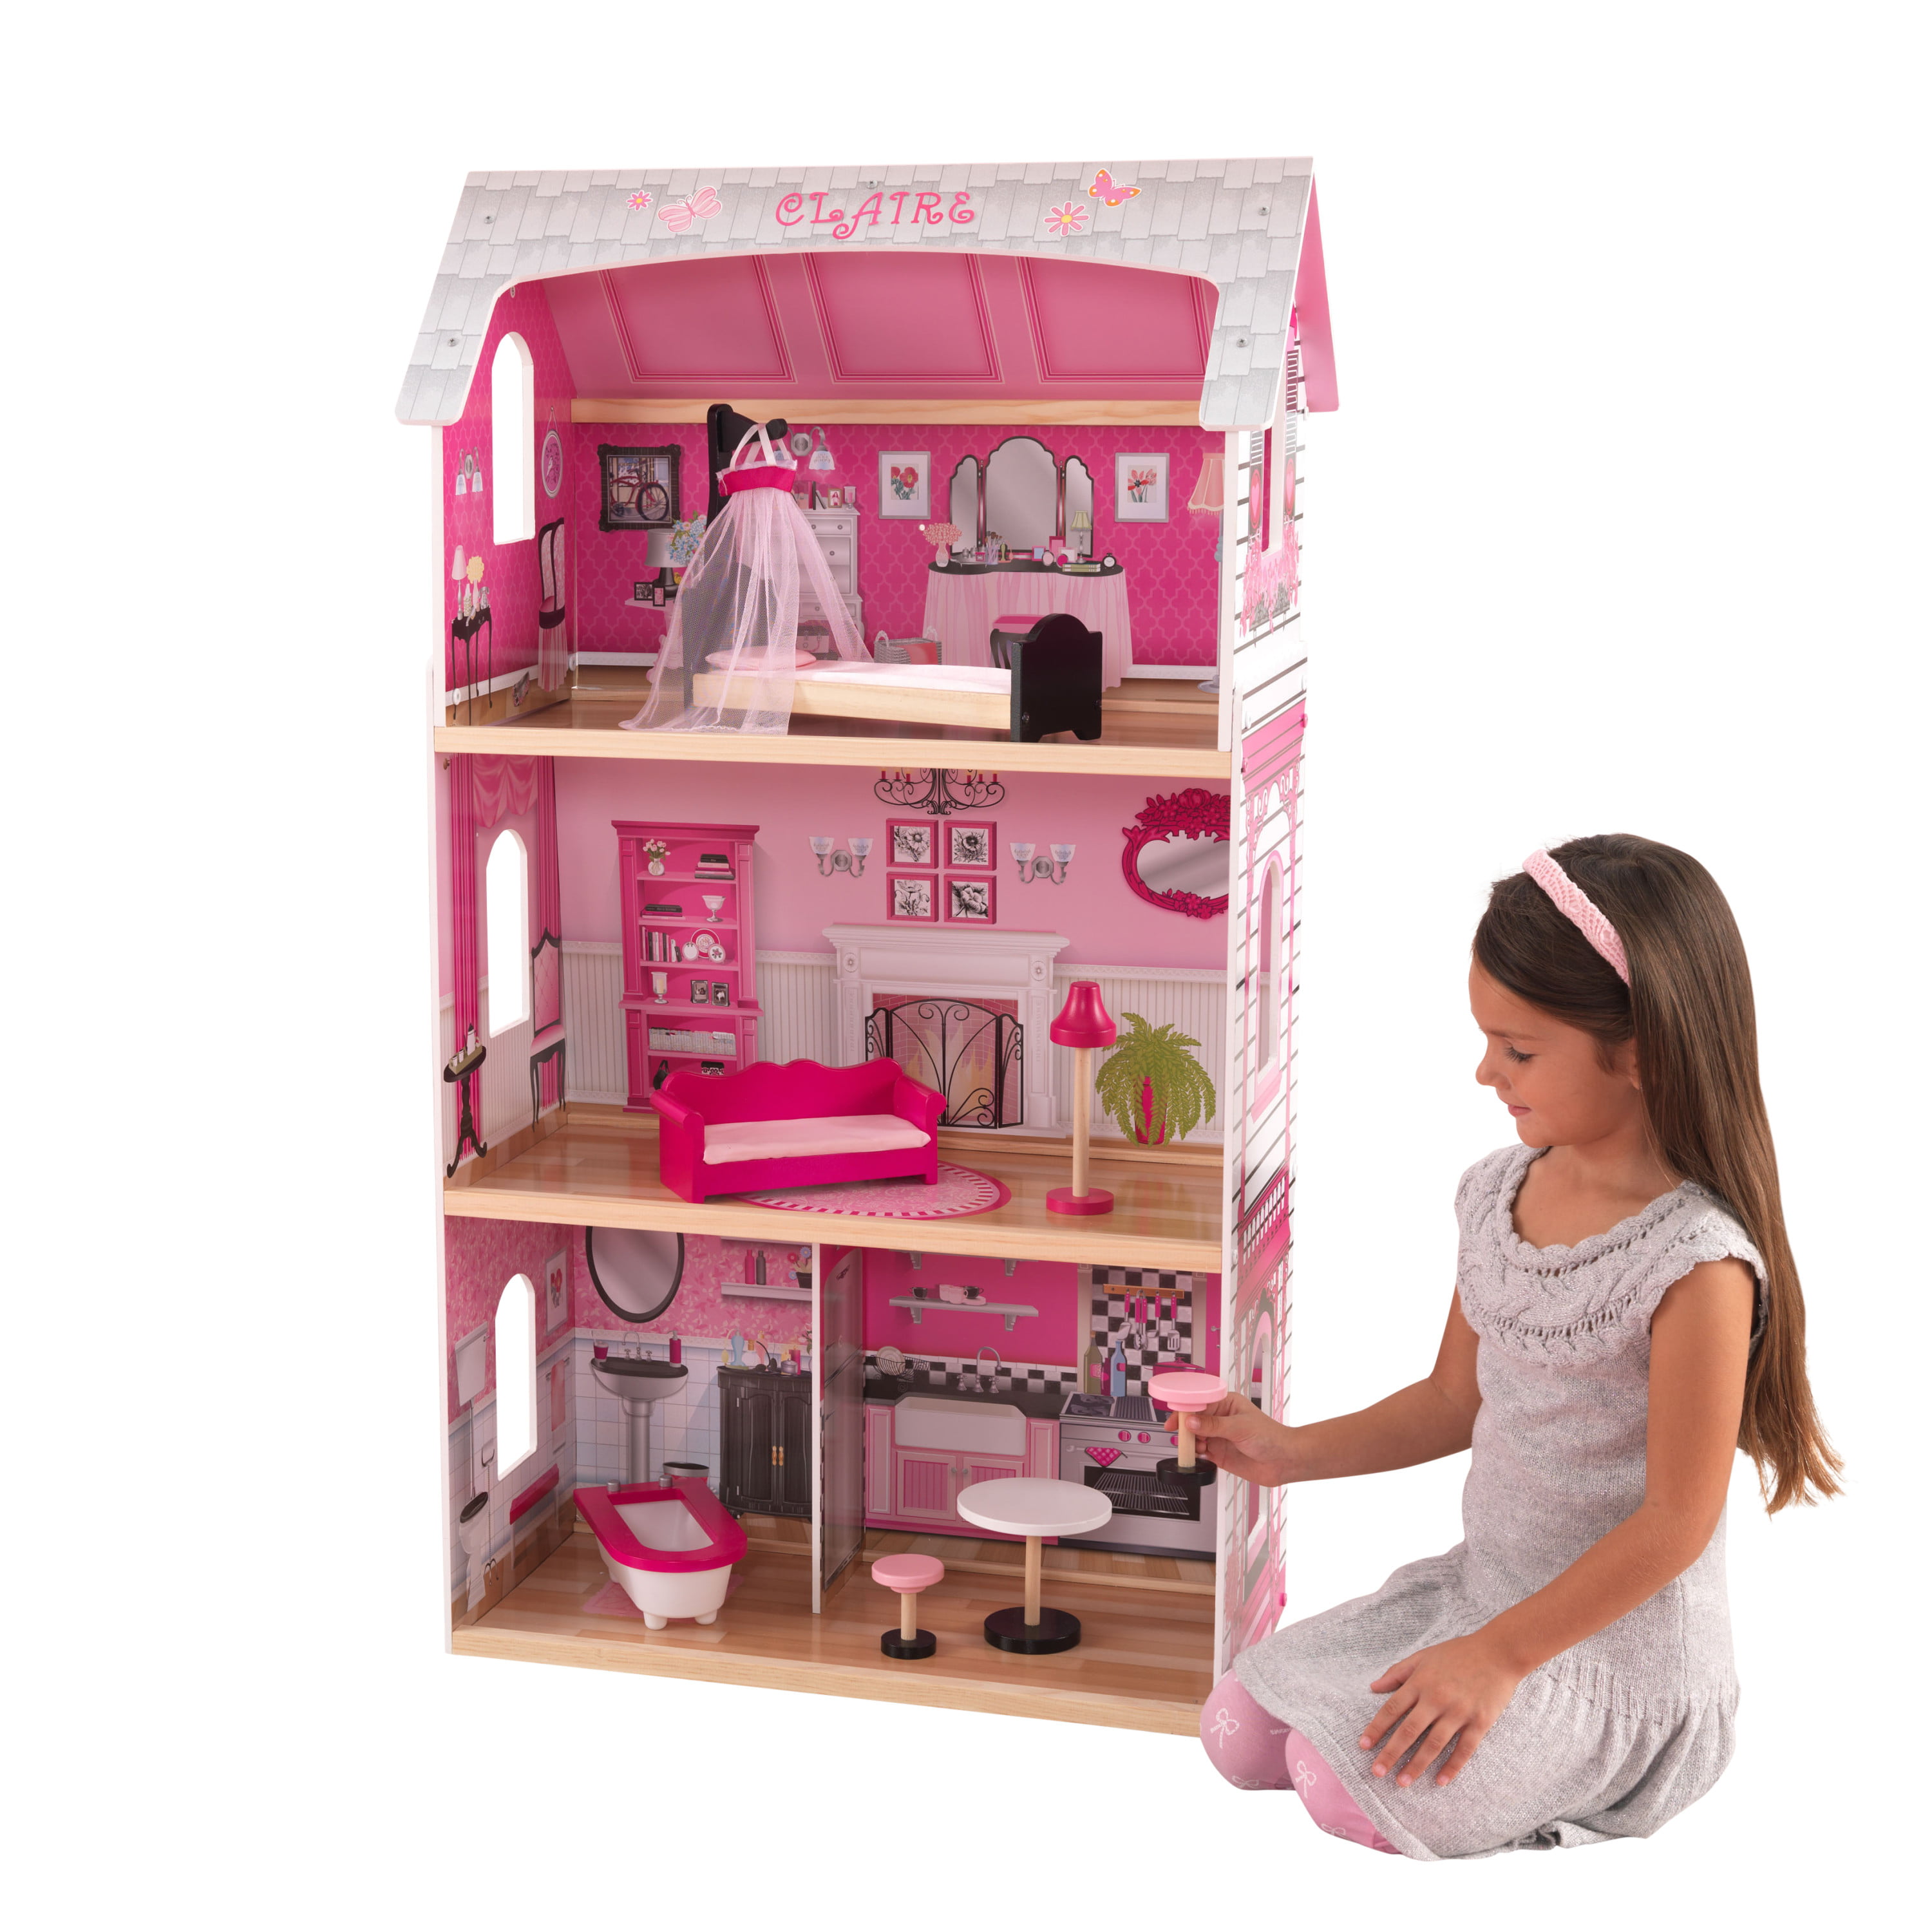 Girls Rosa Barbie Doll principessa Mansion House mobili in legno Play Set Bambole 